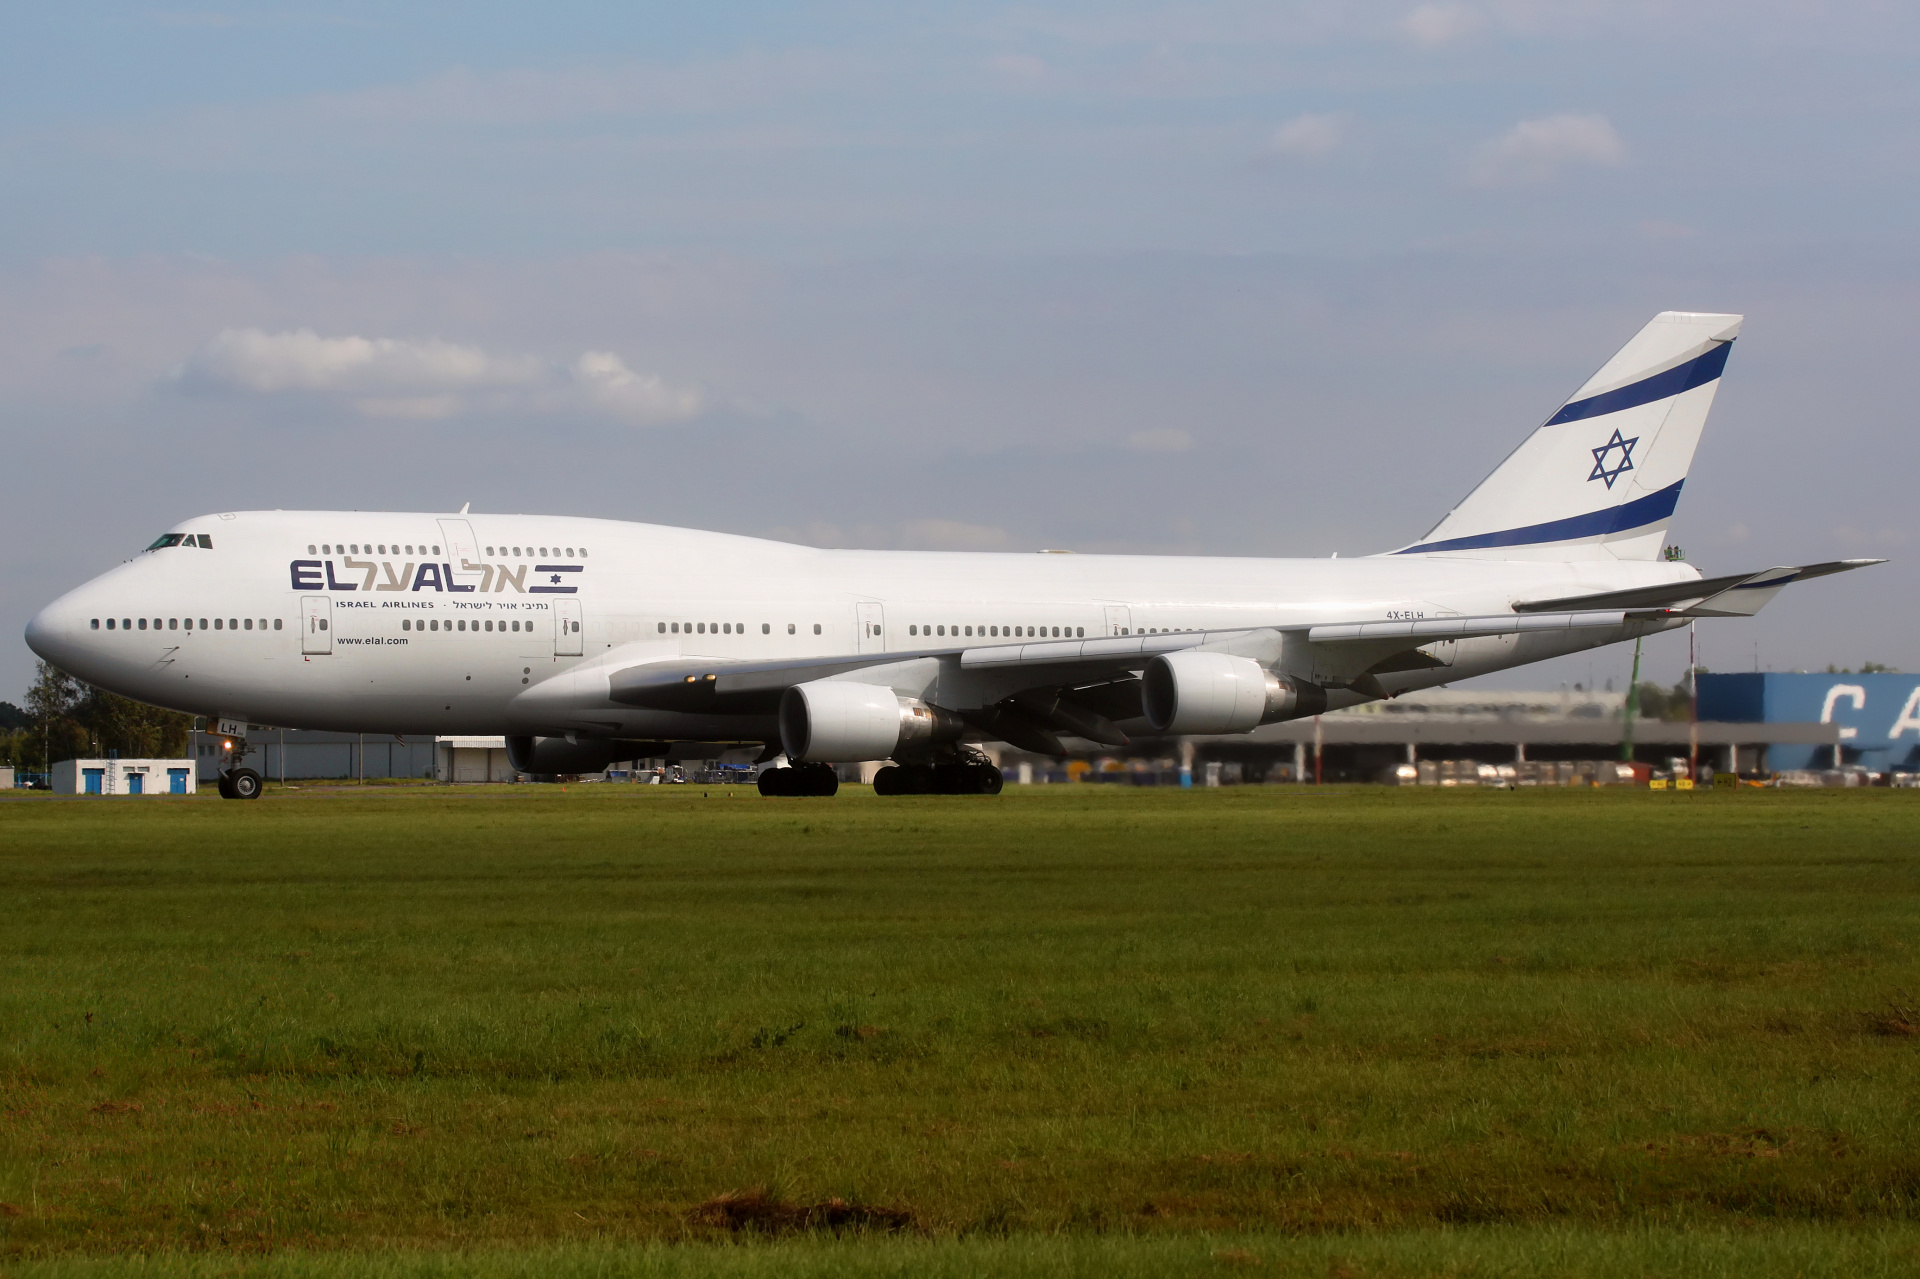 4X-ELH (Aircraft » EPWA Spotting » Boeing 747-400 » El Al Israel Airlines)